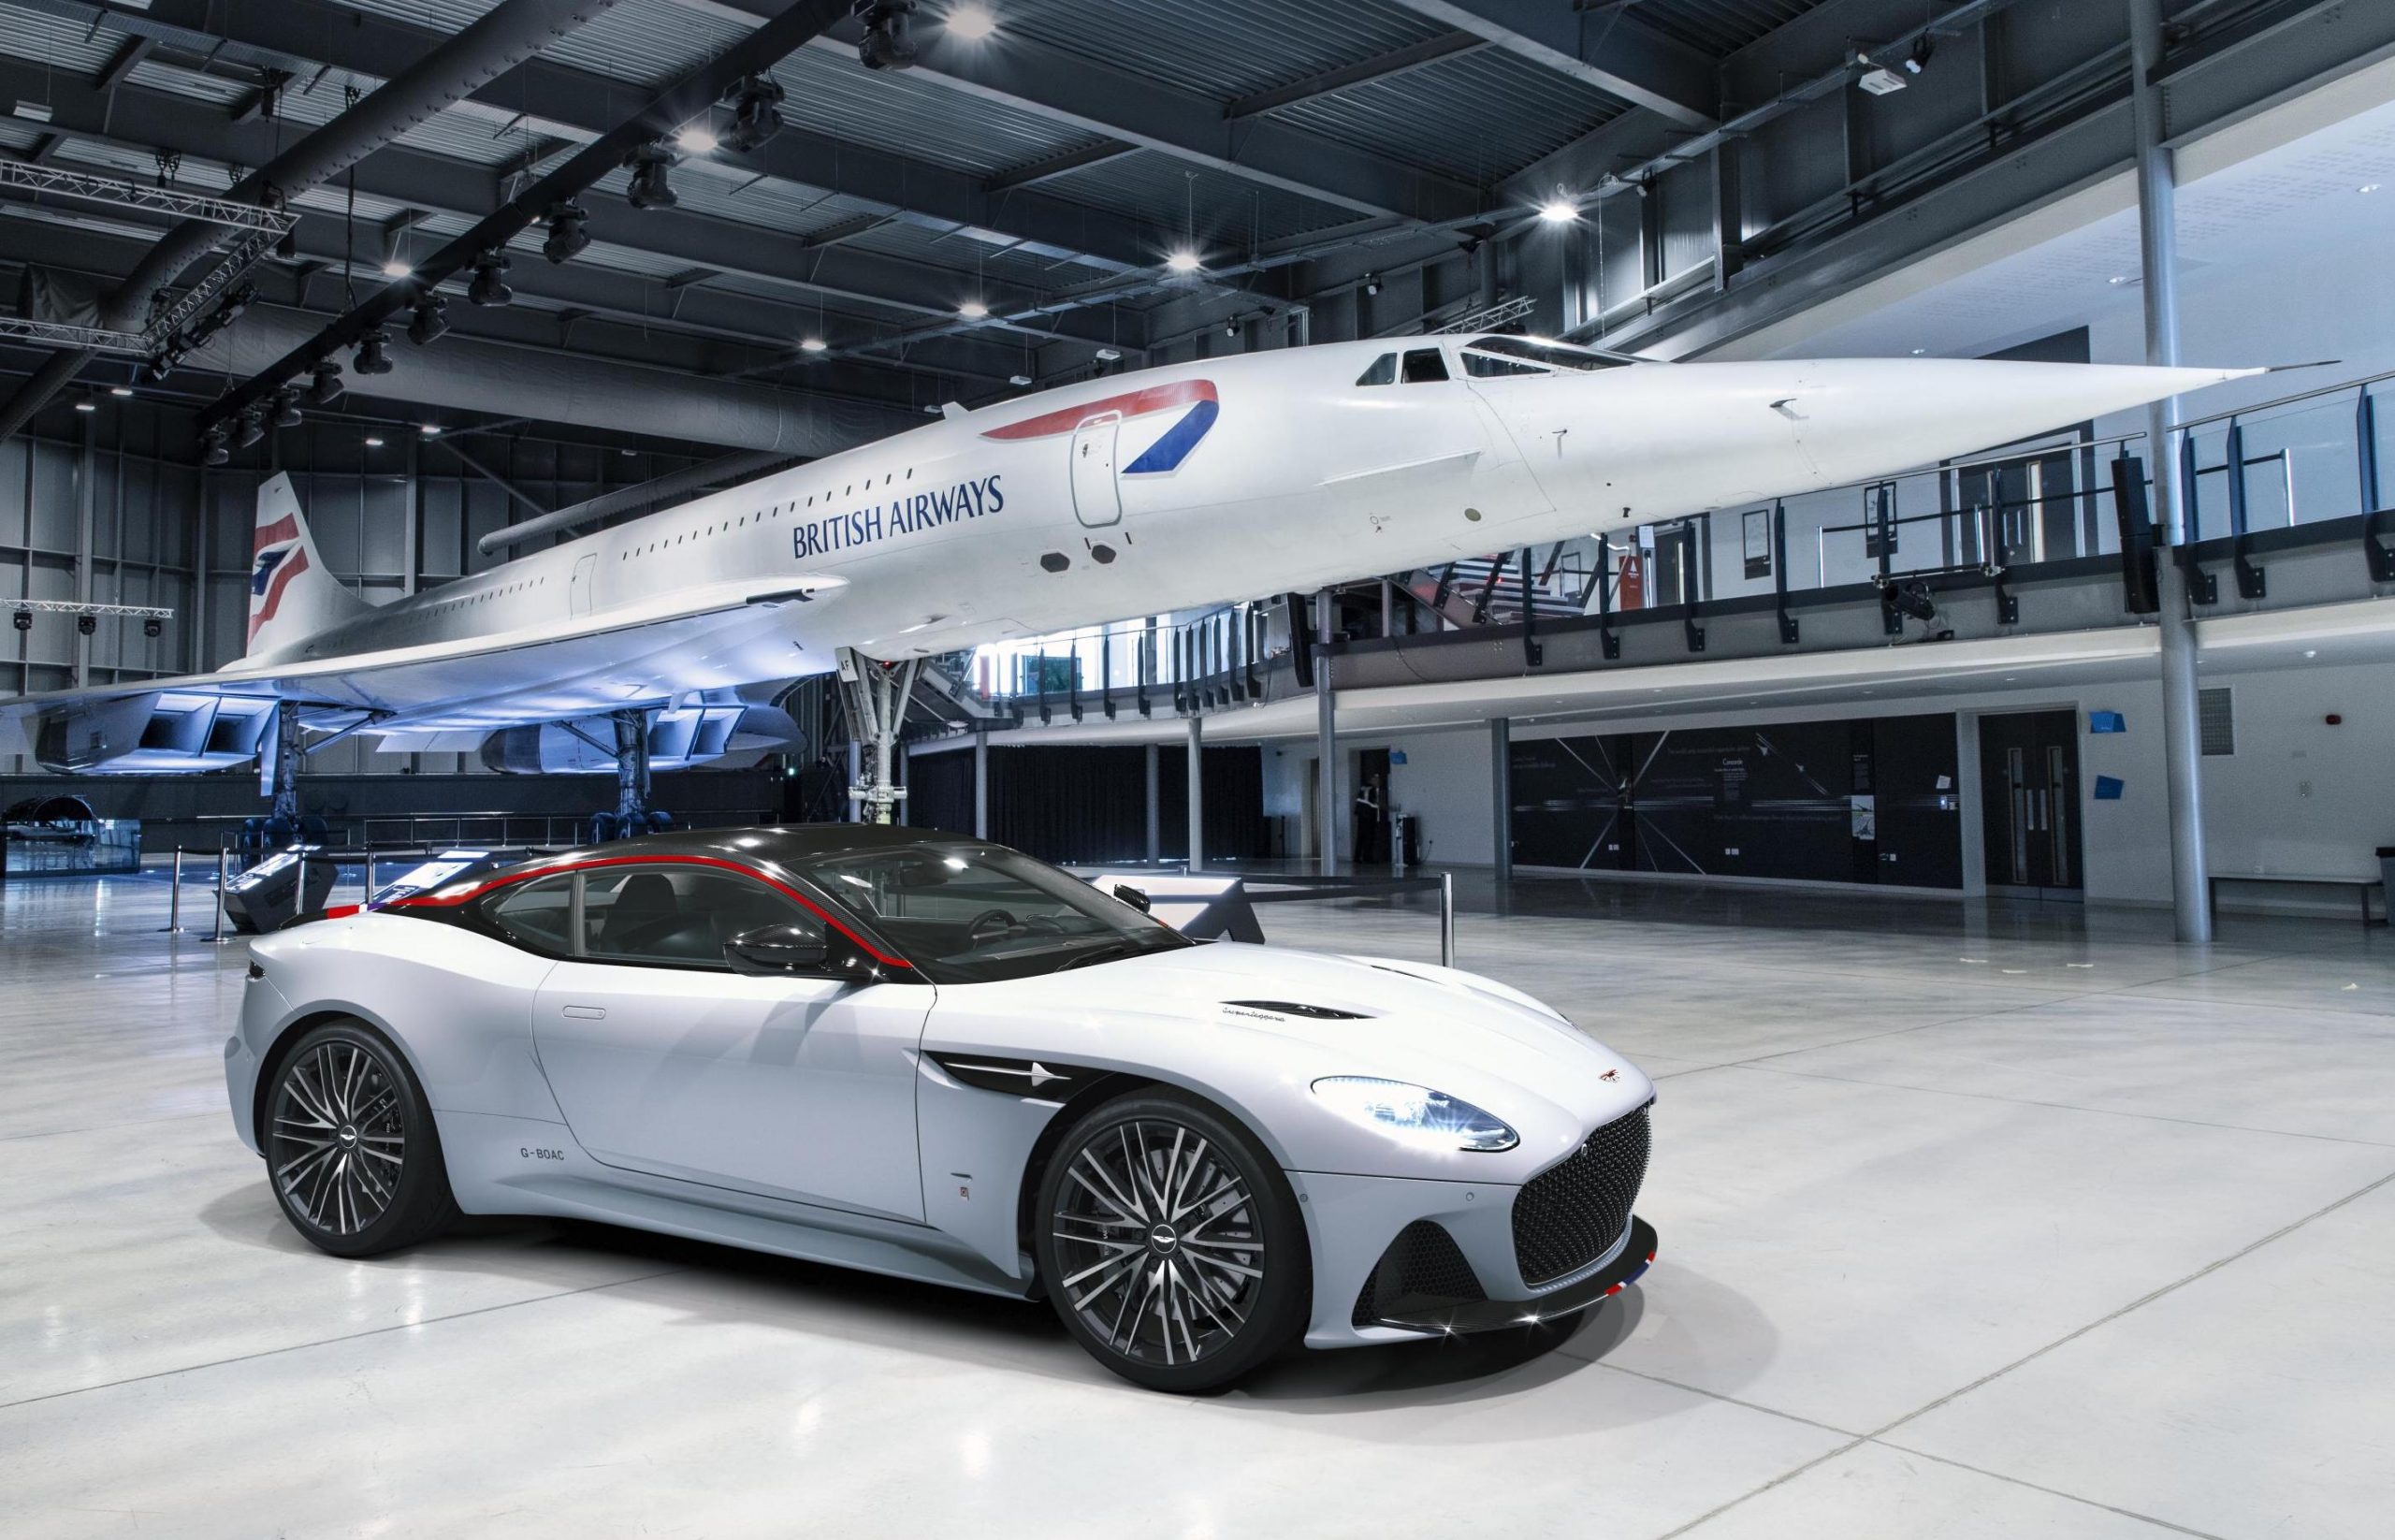 Aston Martin DBS Superleggera Concorde edition revealed